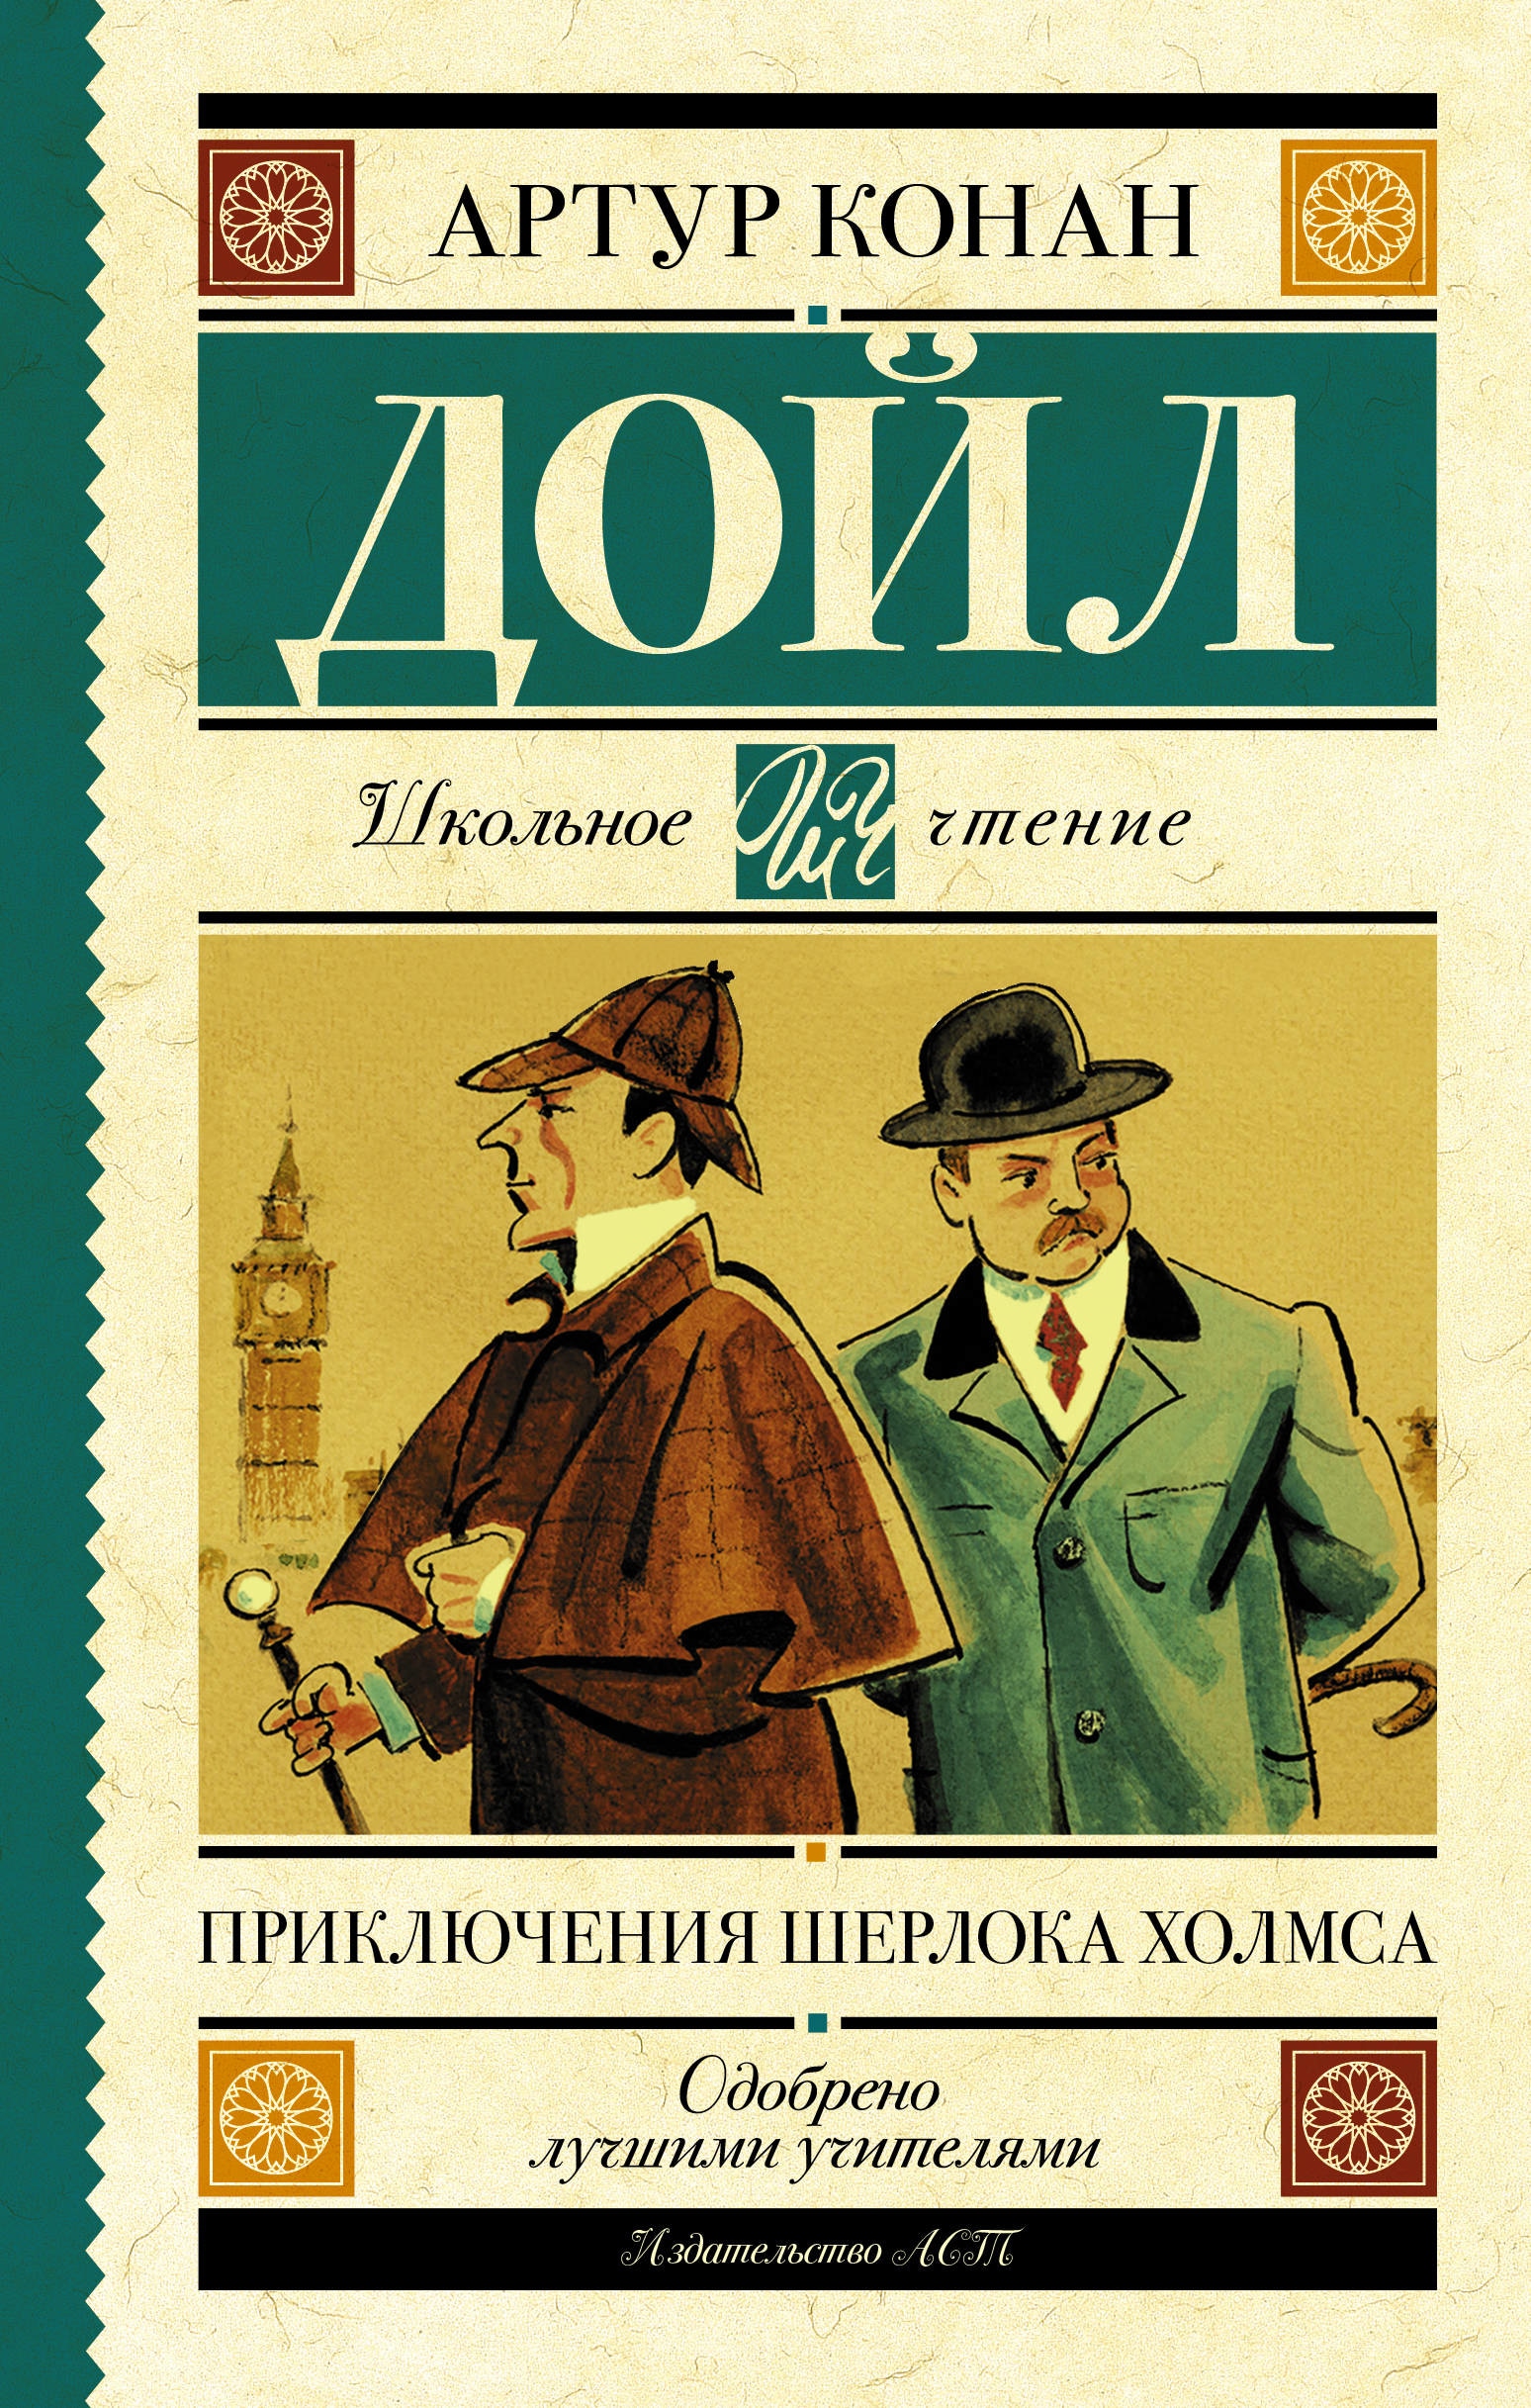 Book “Приключения Шерлока Холмса” by Дойл Артур Конан — April 5, 2021